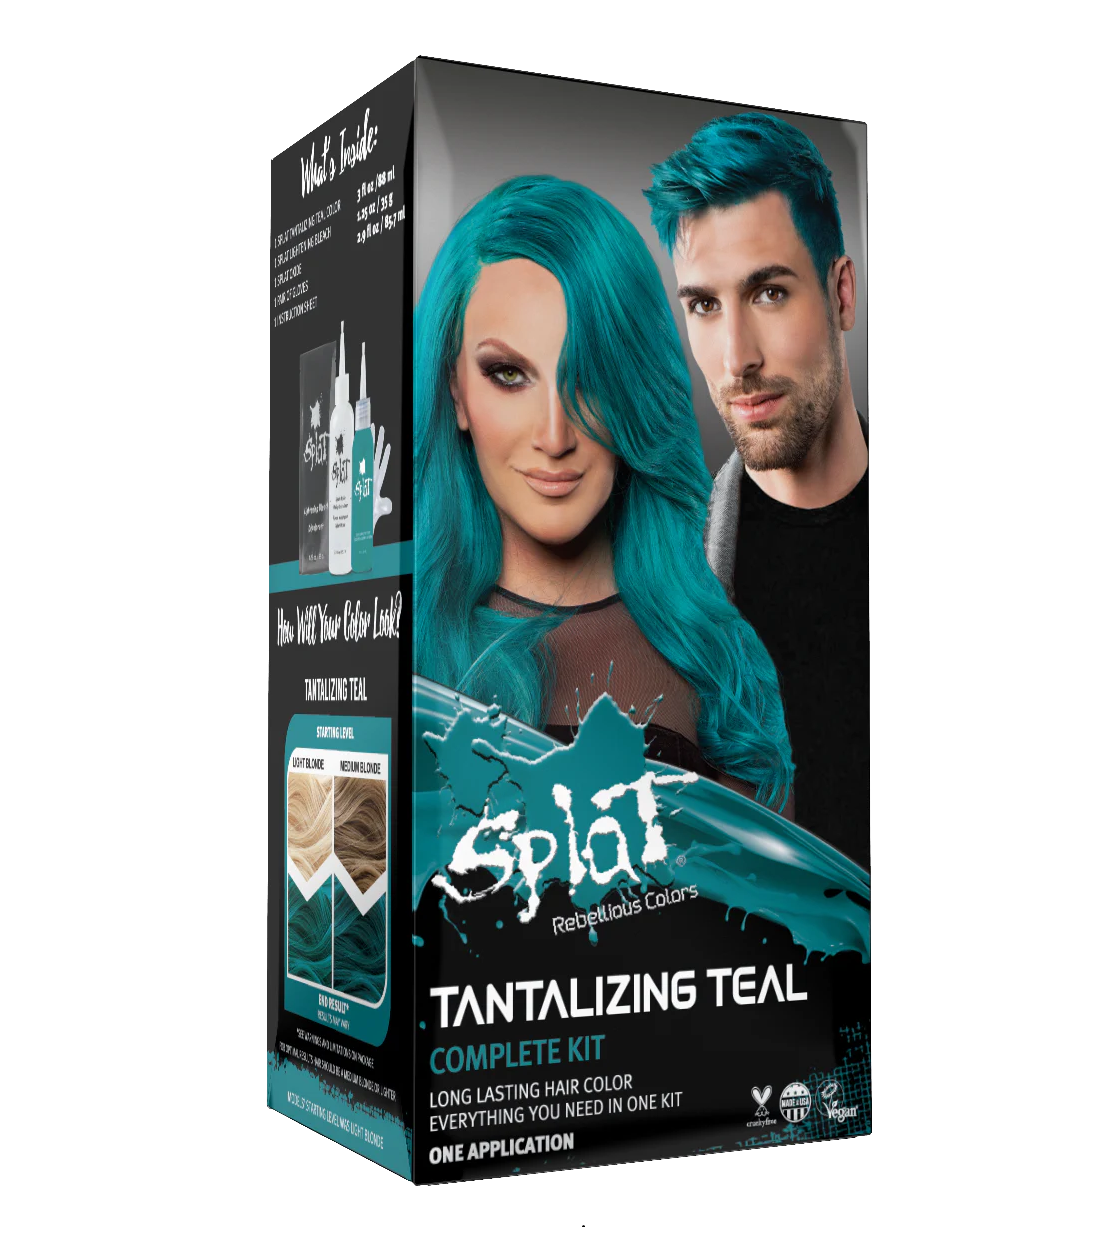 A package of Splat Hair Color's Tantalizing Teal Hair Dye